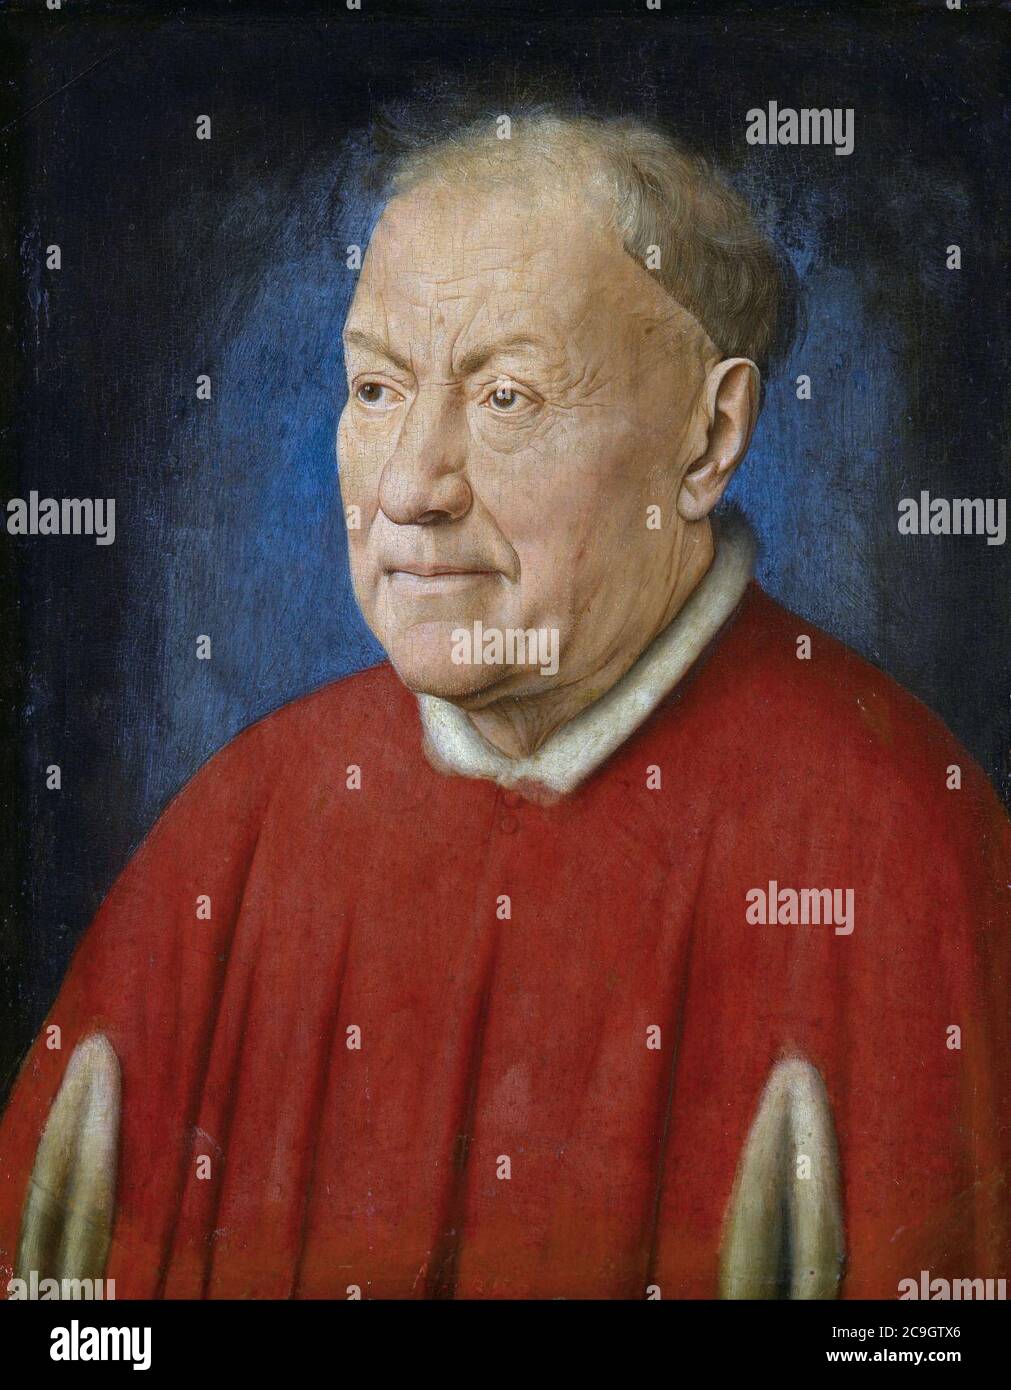 Jan van Eyck - Kardinal Niccolò Albergati Stock Photo - Alamy